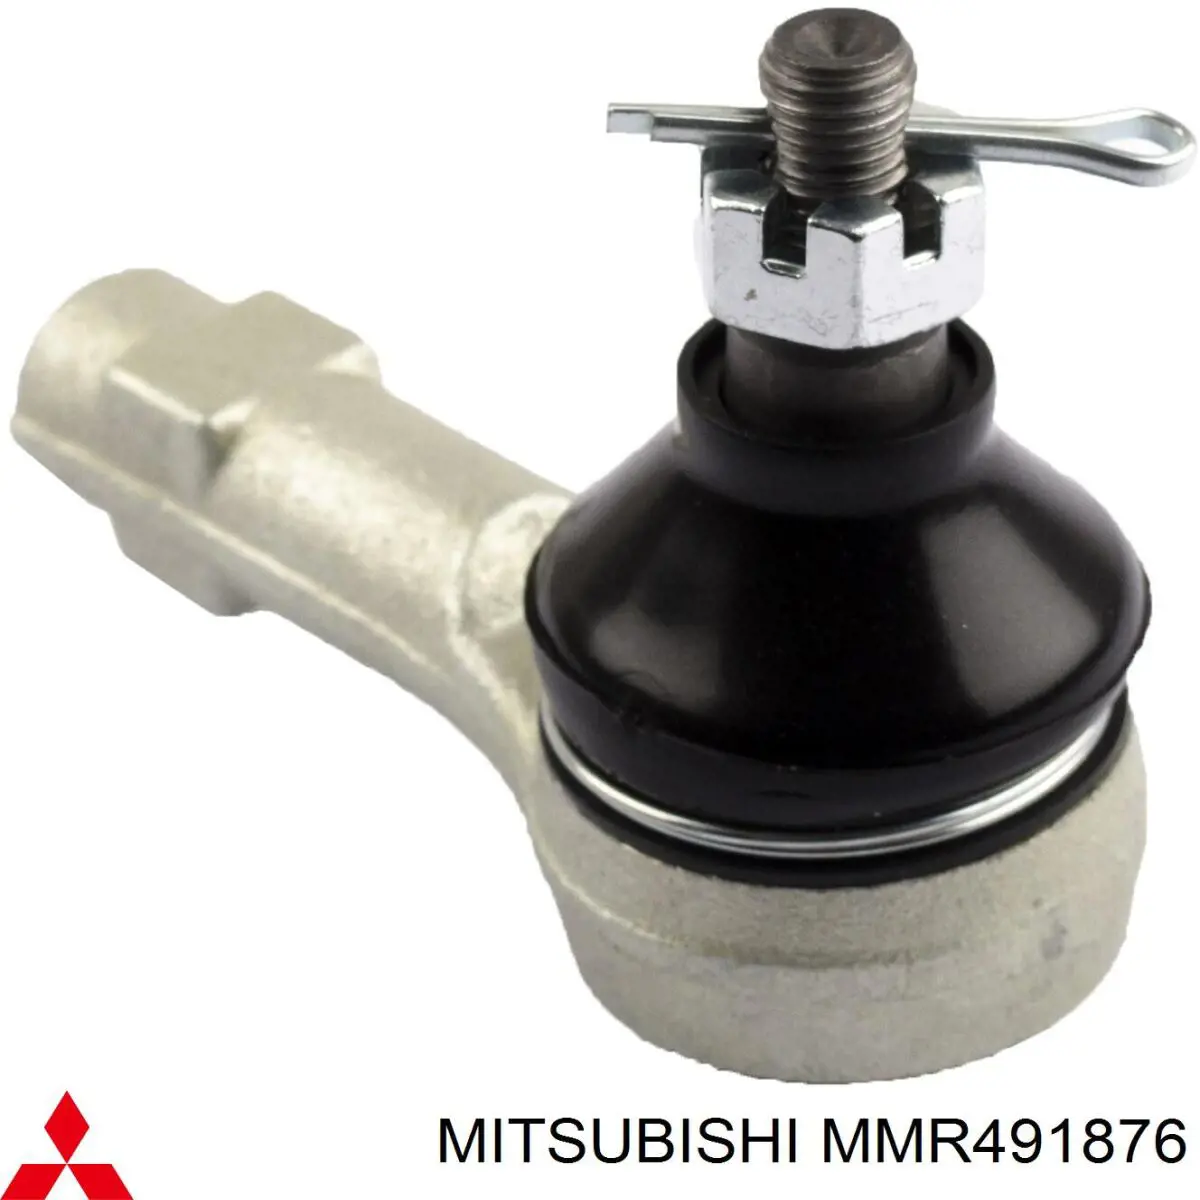 MMR491876 Mitsubishi cremalheira da direção